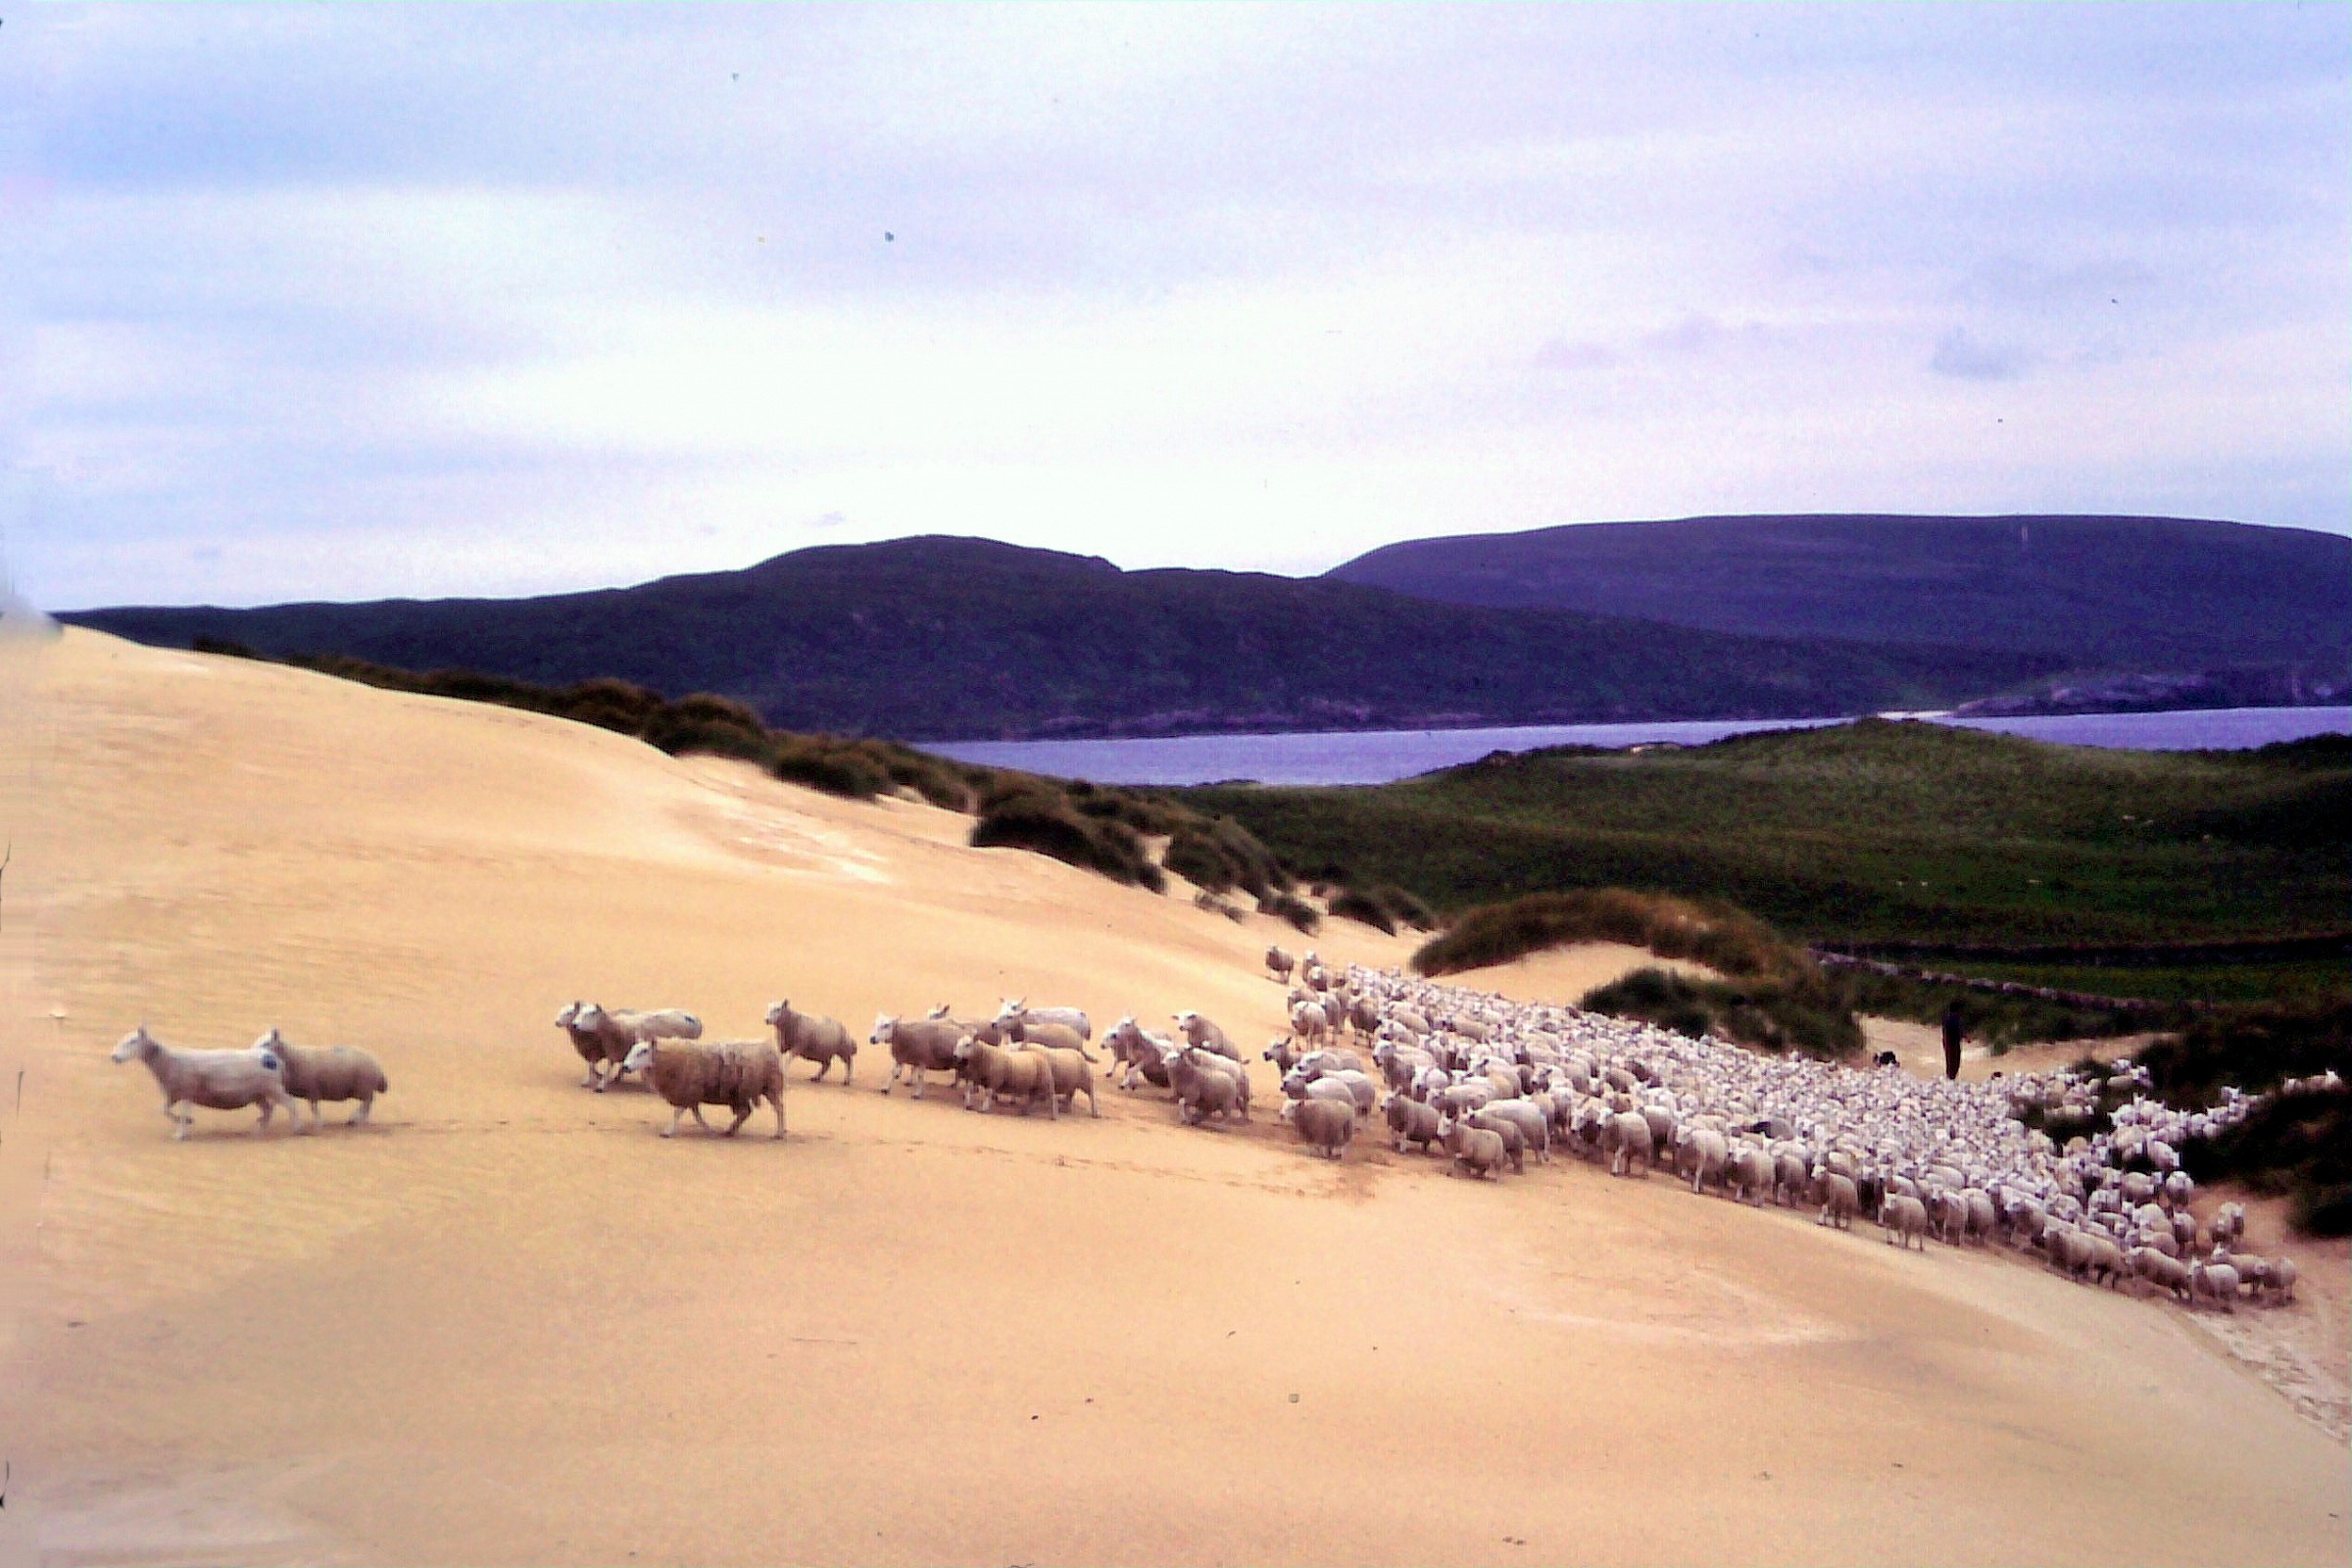 Dune and sheep...